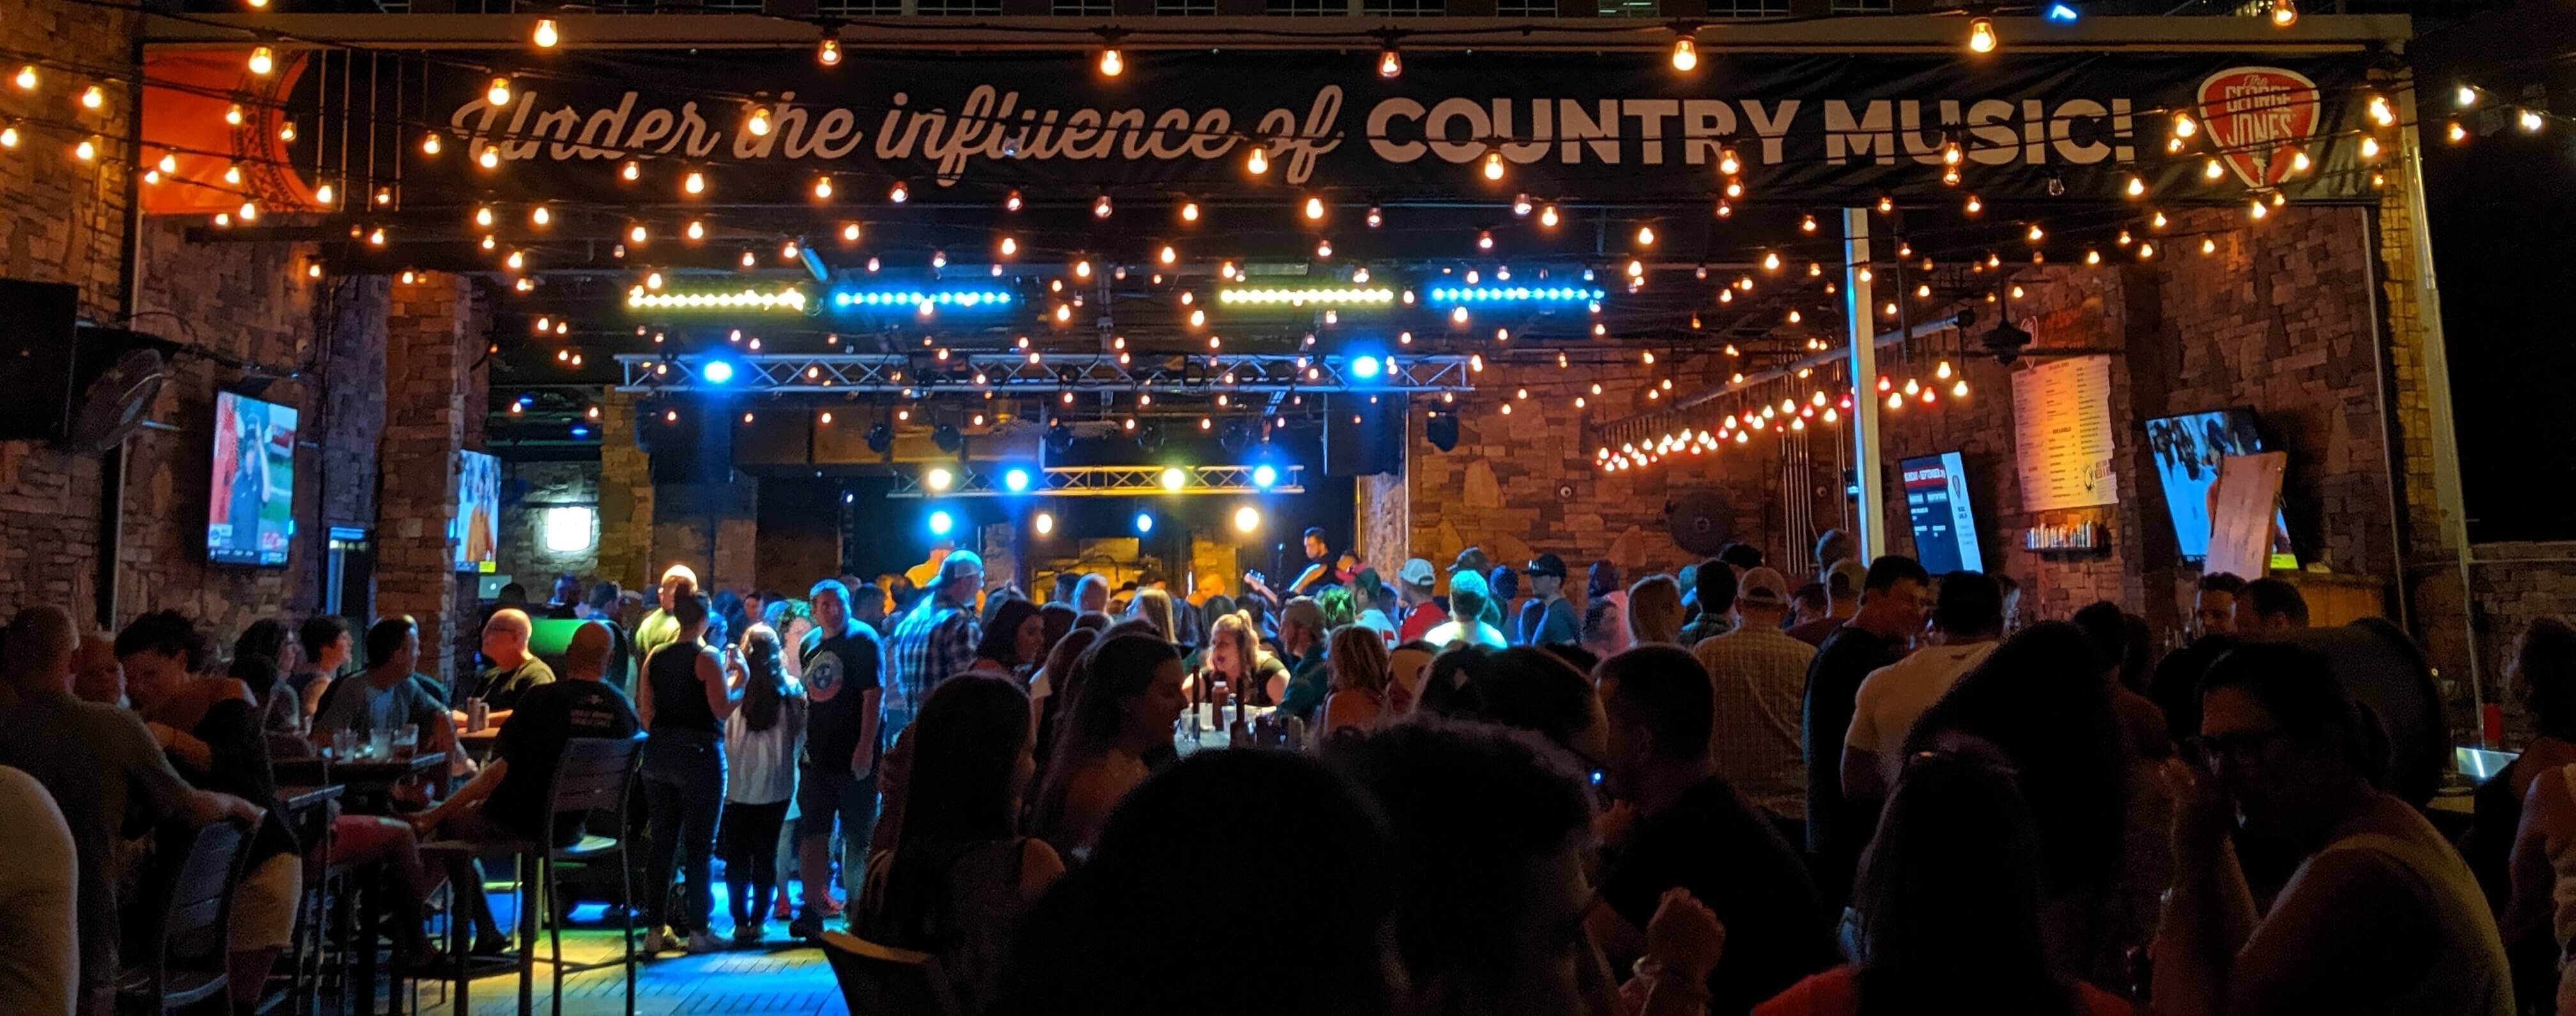 Nashville rooftop bar live music as George Jones | FlyCheapAlways